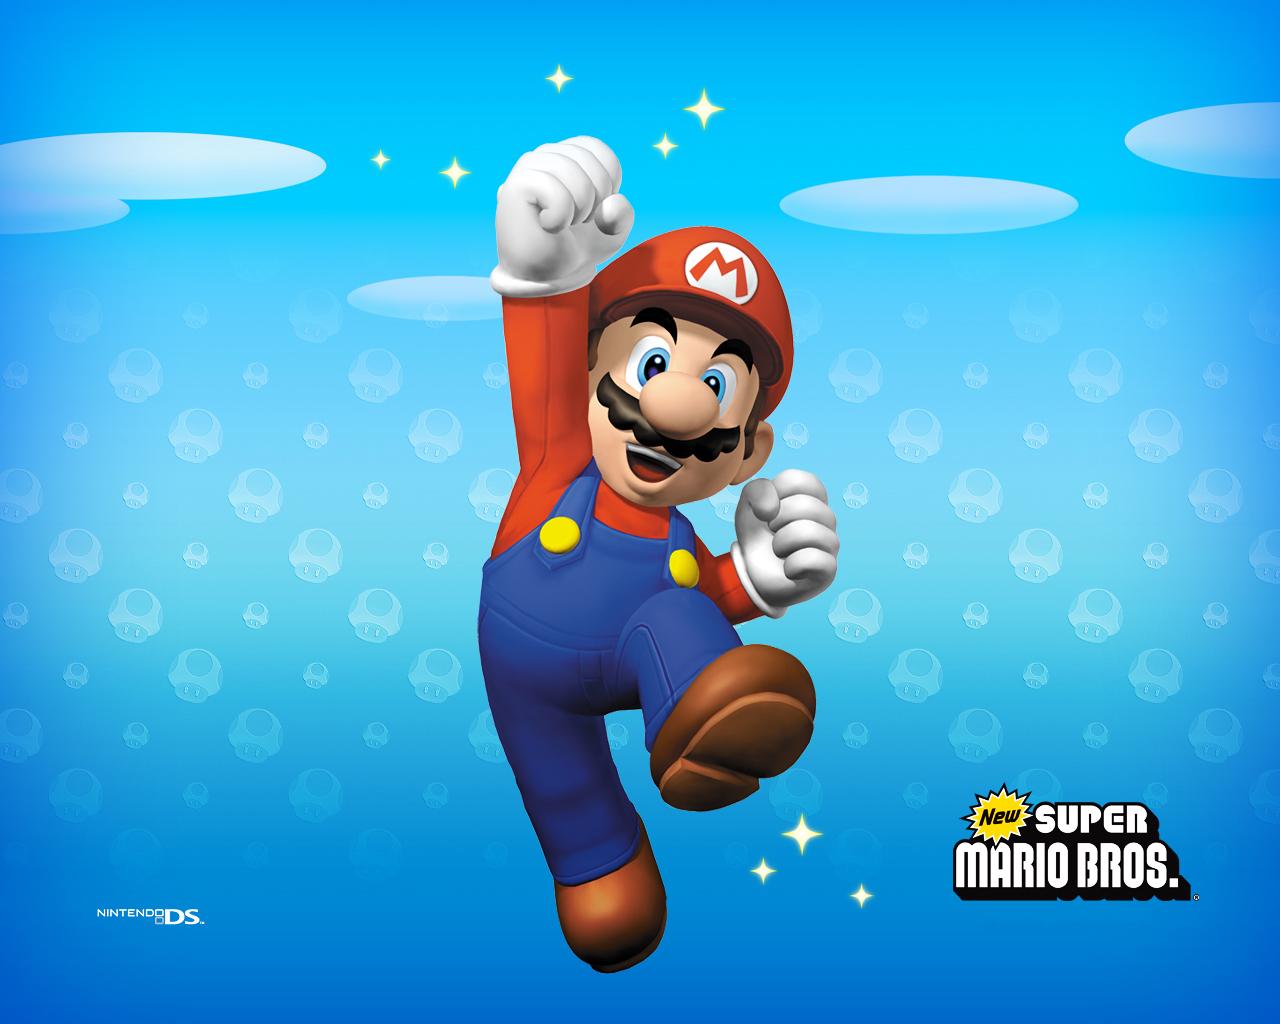 Free download Super Mario Bros image New Super Mario Brothers